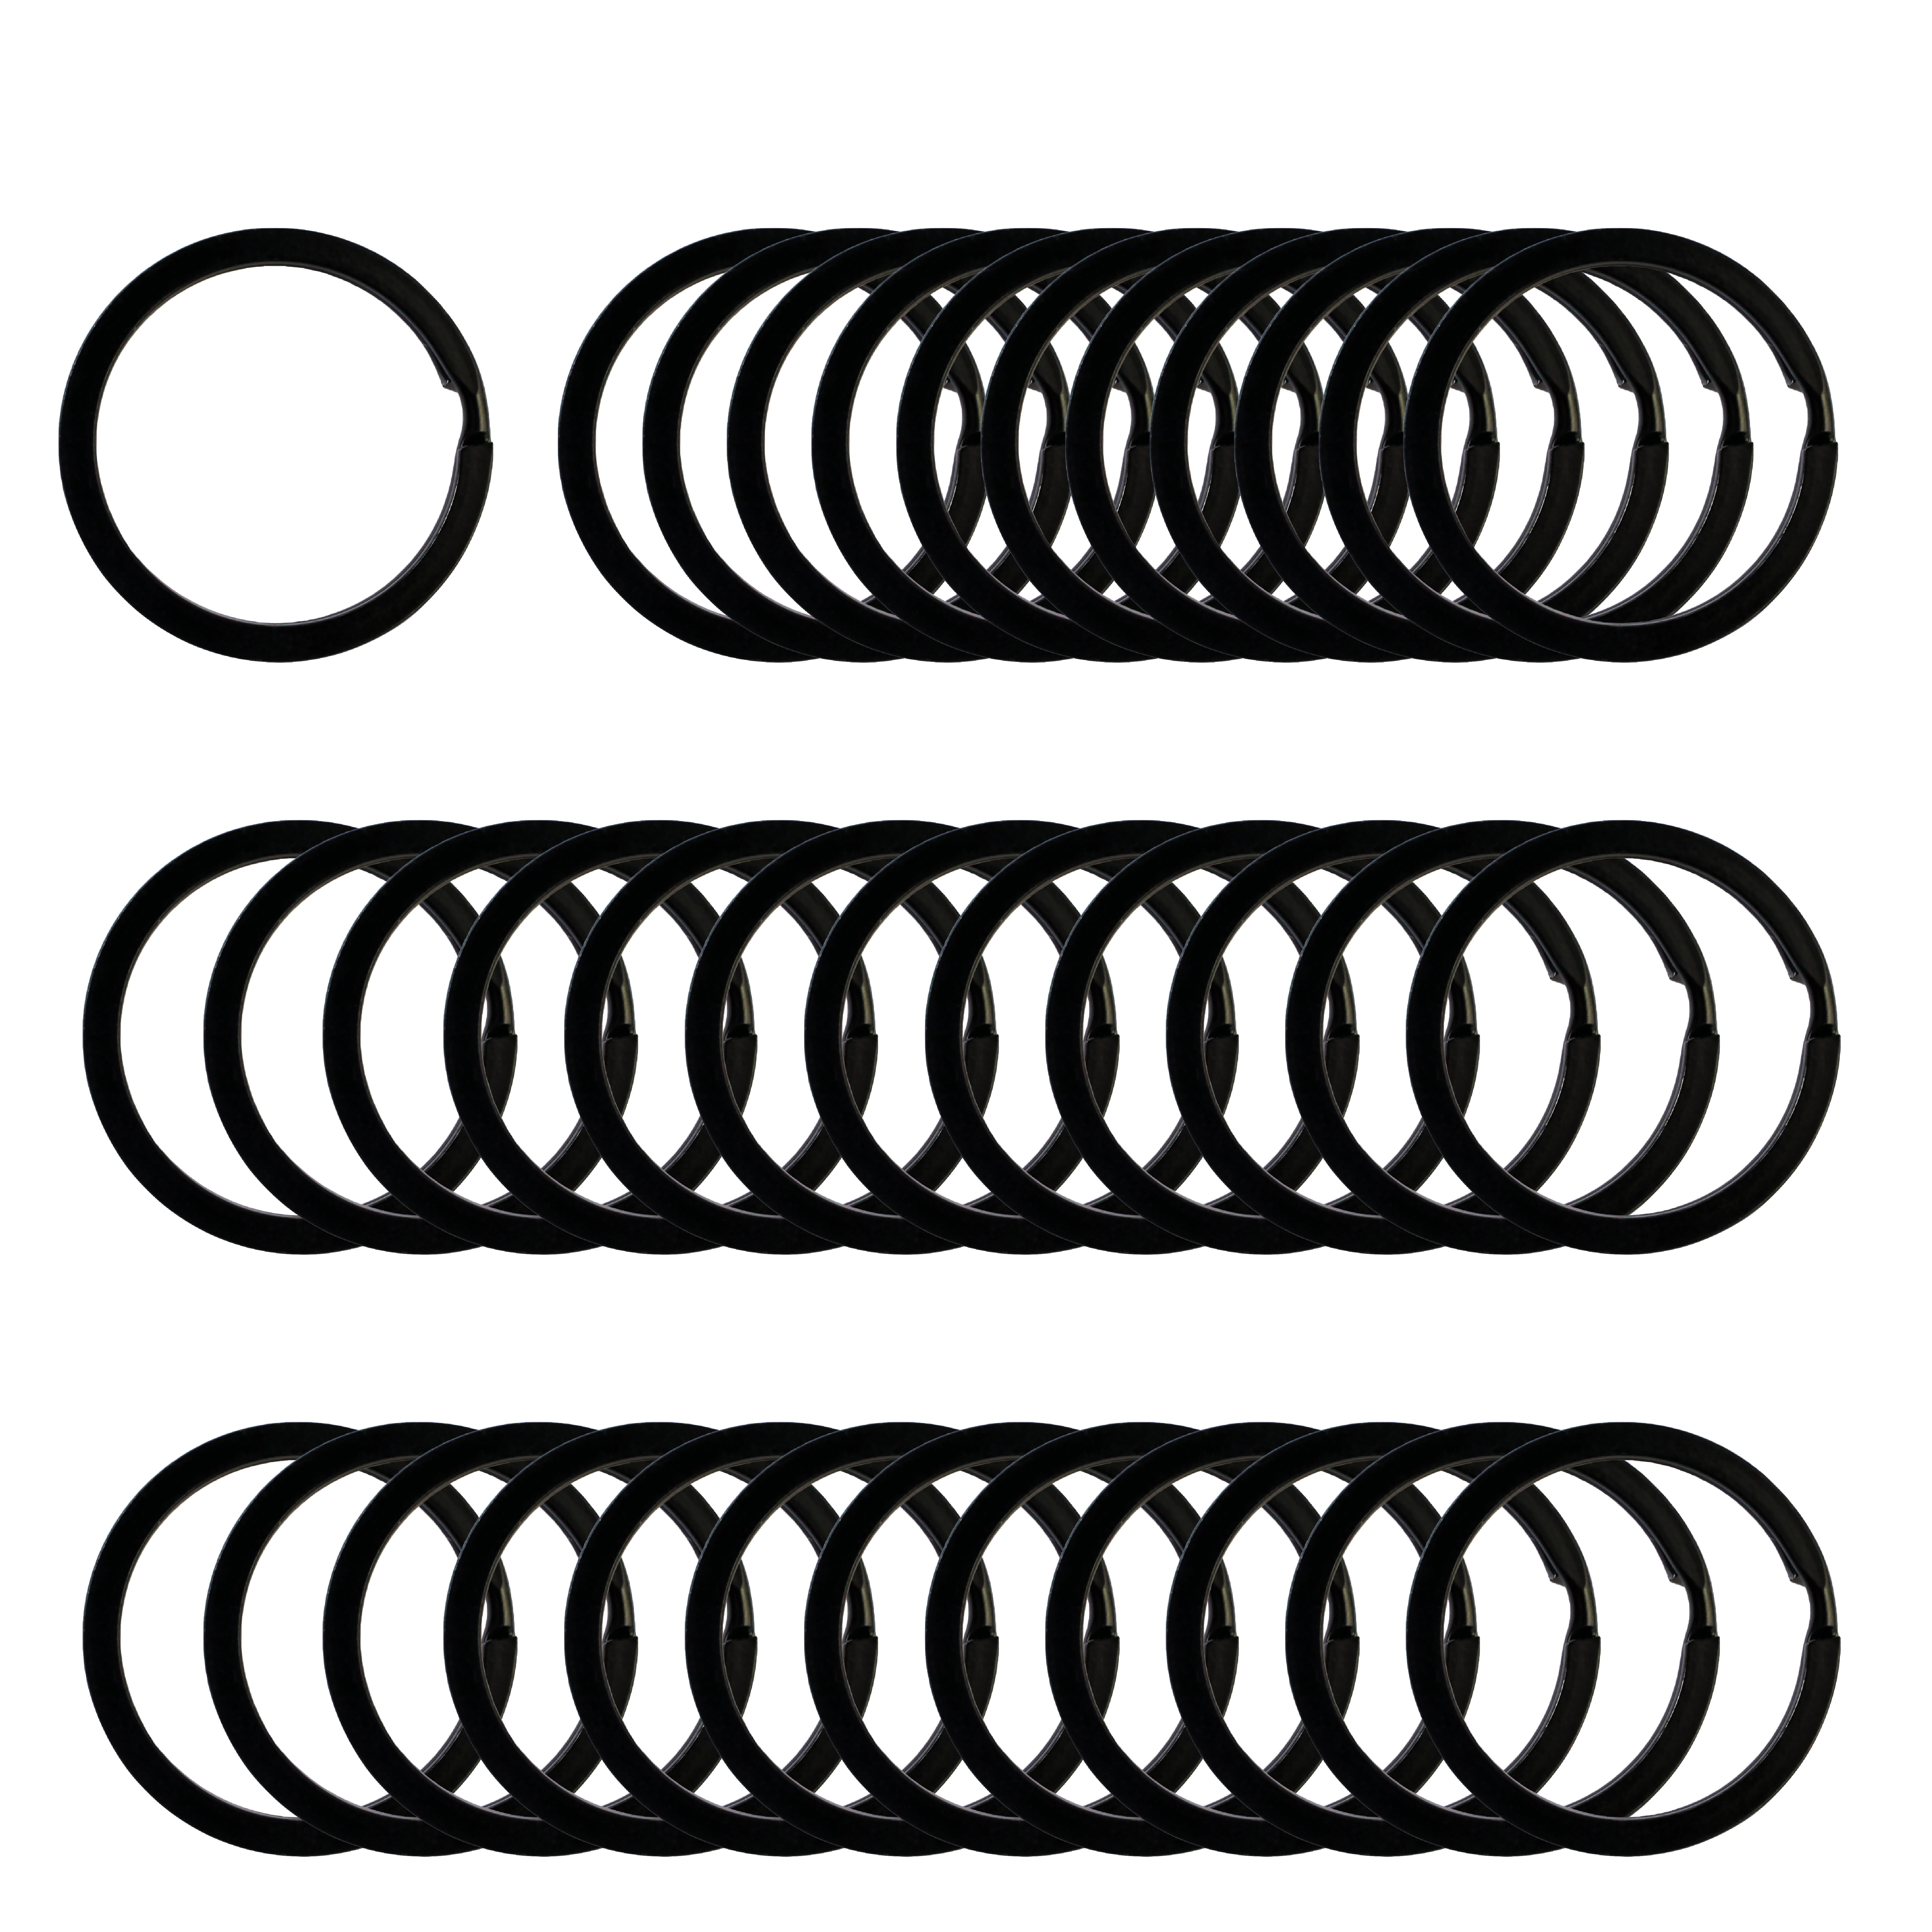 Key Rings Metal Flat Split Key Chains Rings for Home Car Keys Attachment 1 Inch/25mm,Black,50PCS/Box